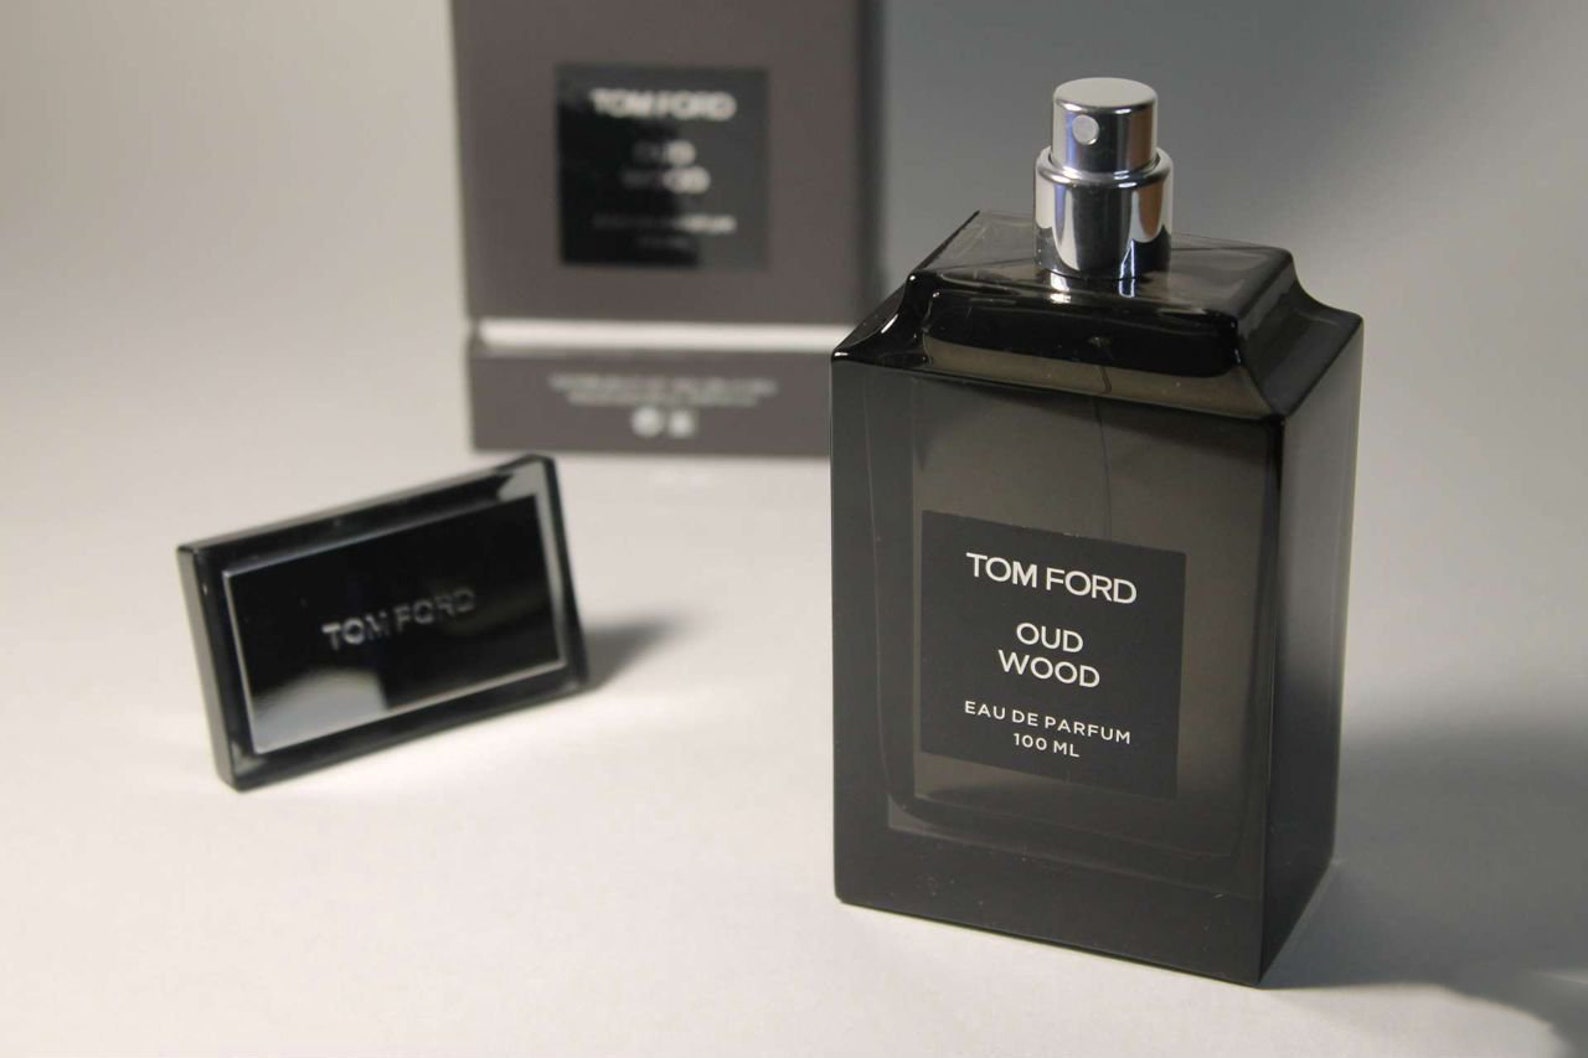 Tom Ford Oud Wood Eau De Parfum 100 ml 3.4 oz / Nuevo en Caja | Etsy